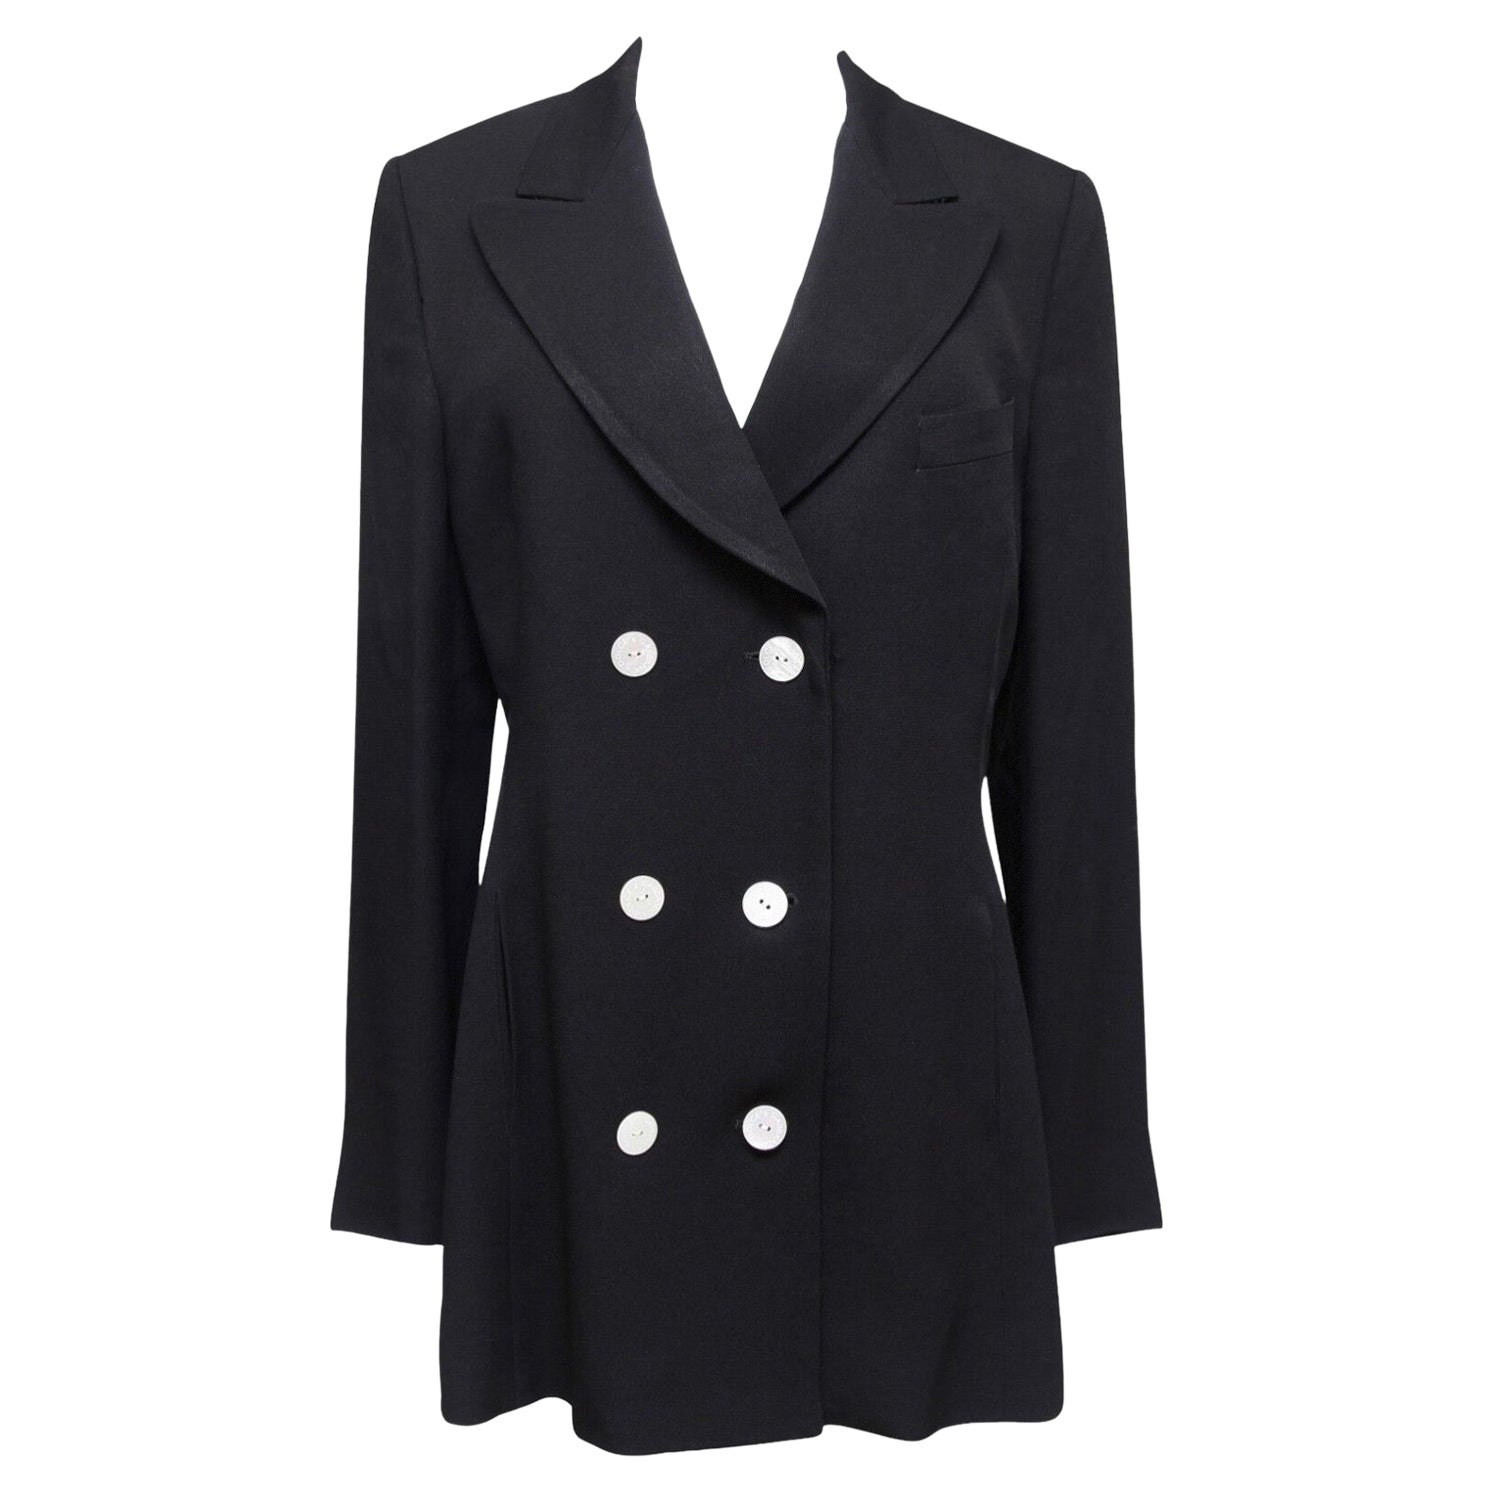 DOLCE & GABBANA Black Blazer Double Breasted Jacket Coat Sz 42 VINTAGE